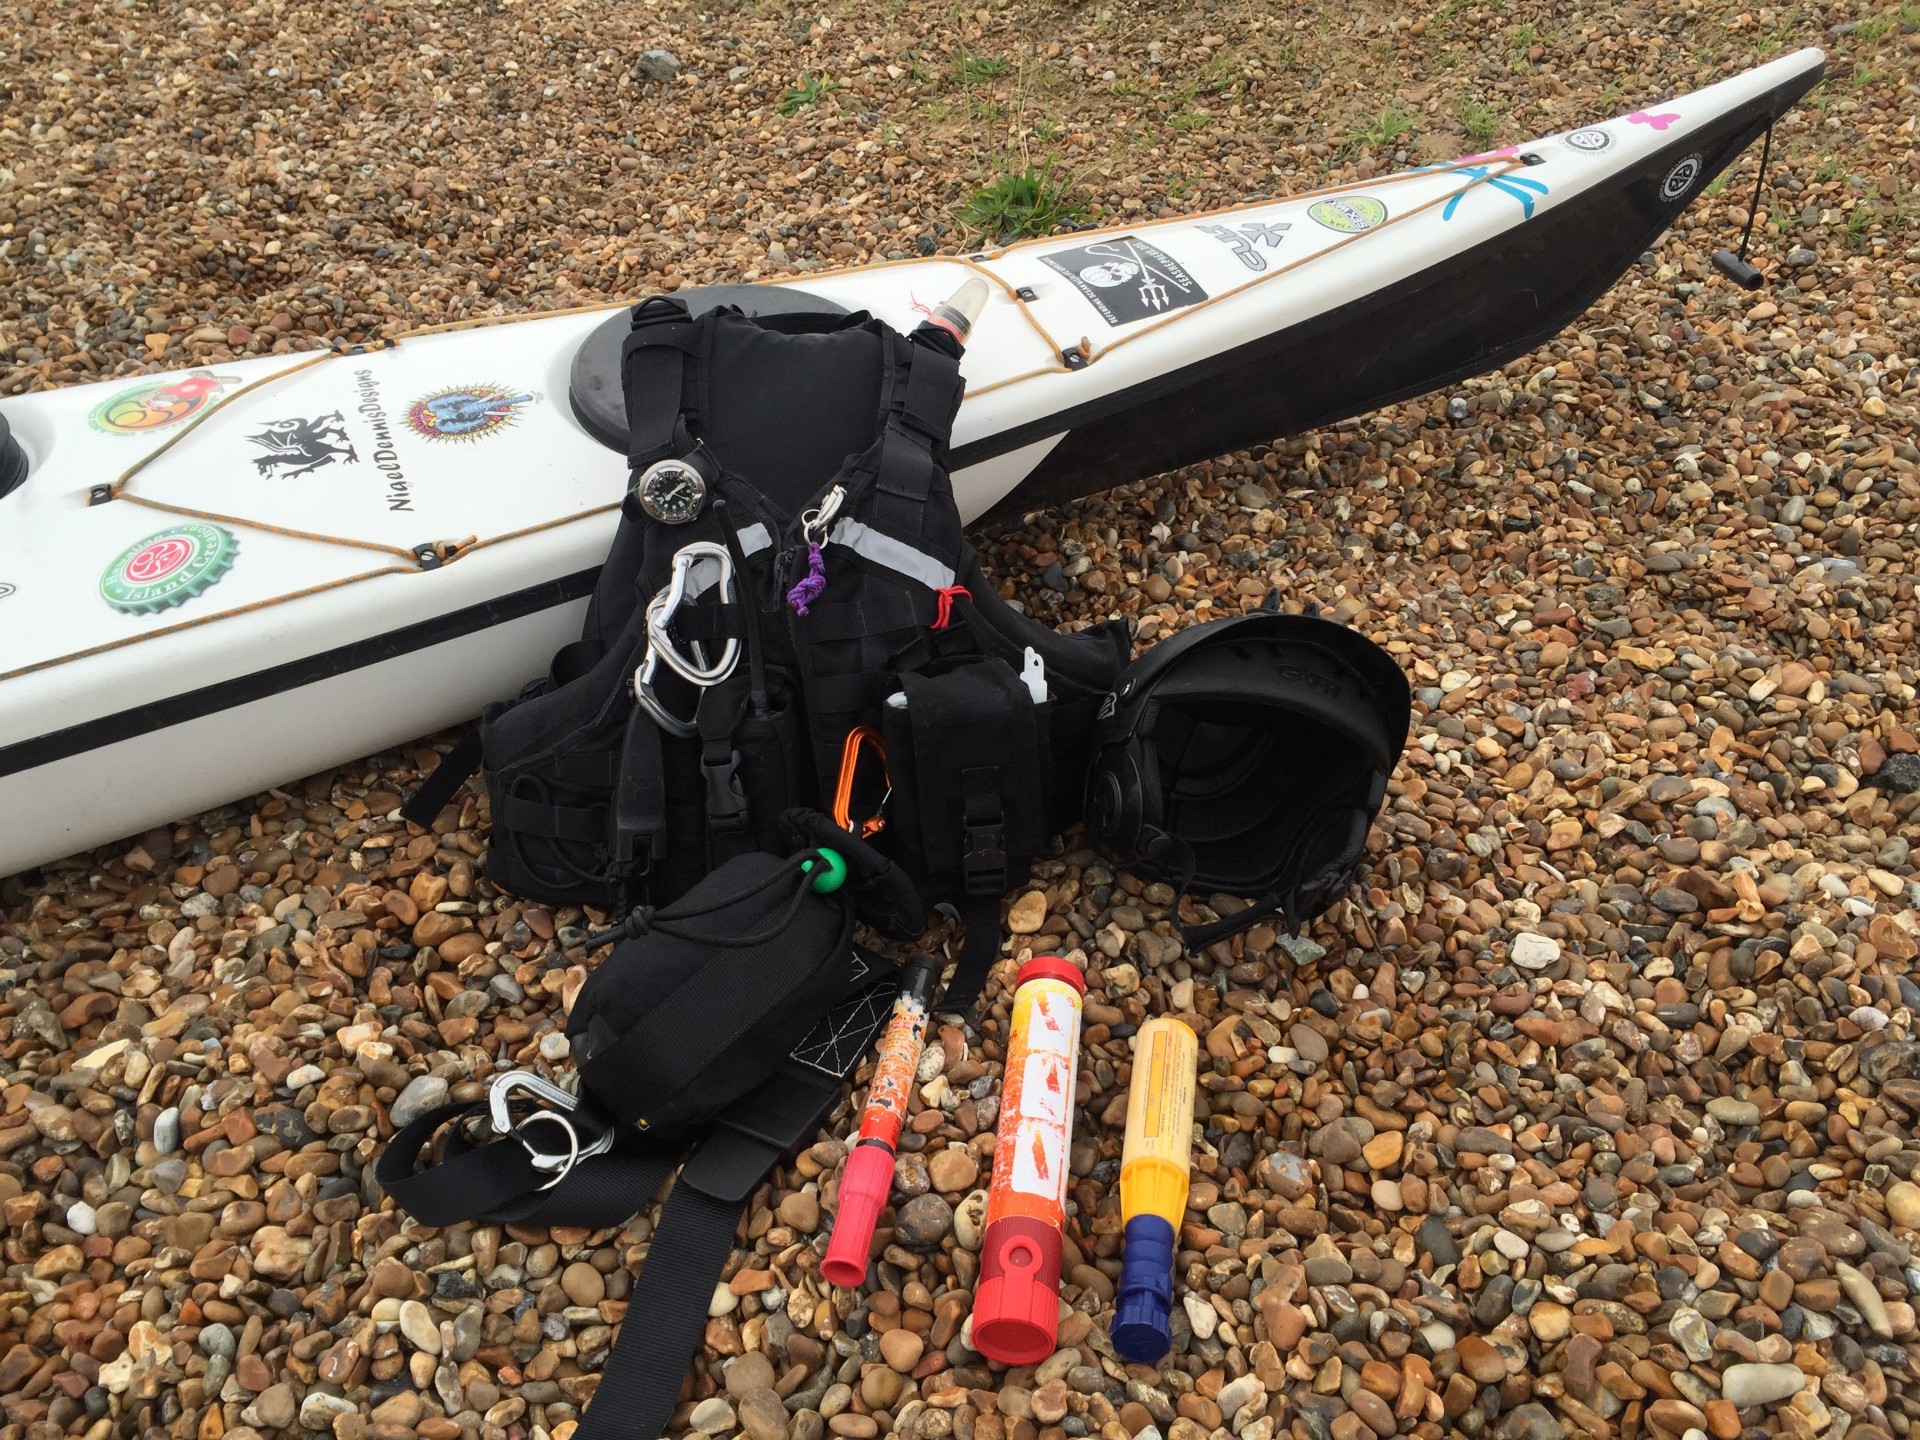 Nomad Sea Kayaking  Sun Protection and Layering